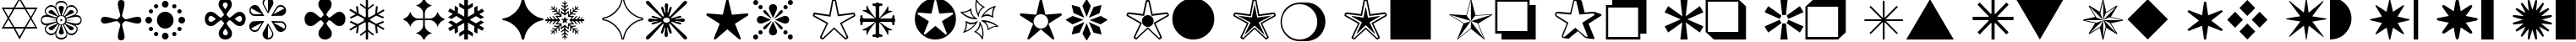 Пример написания английского алфавита шрифтом Monotype Sorts